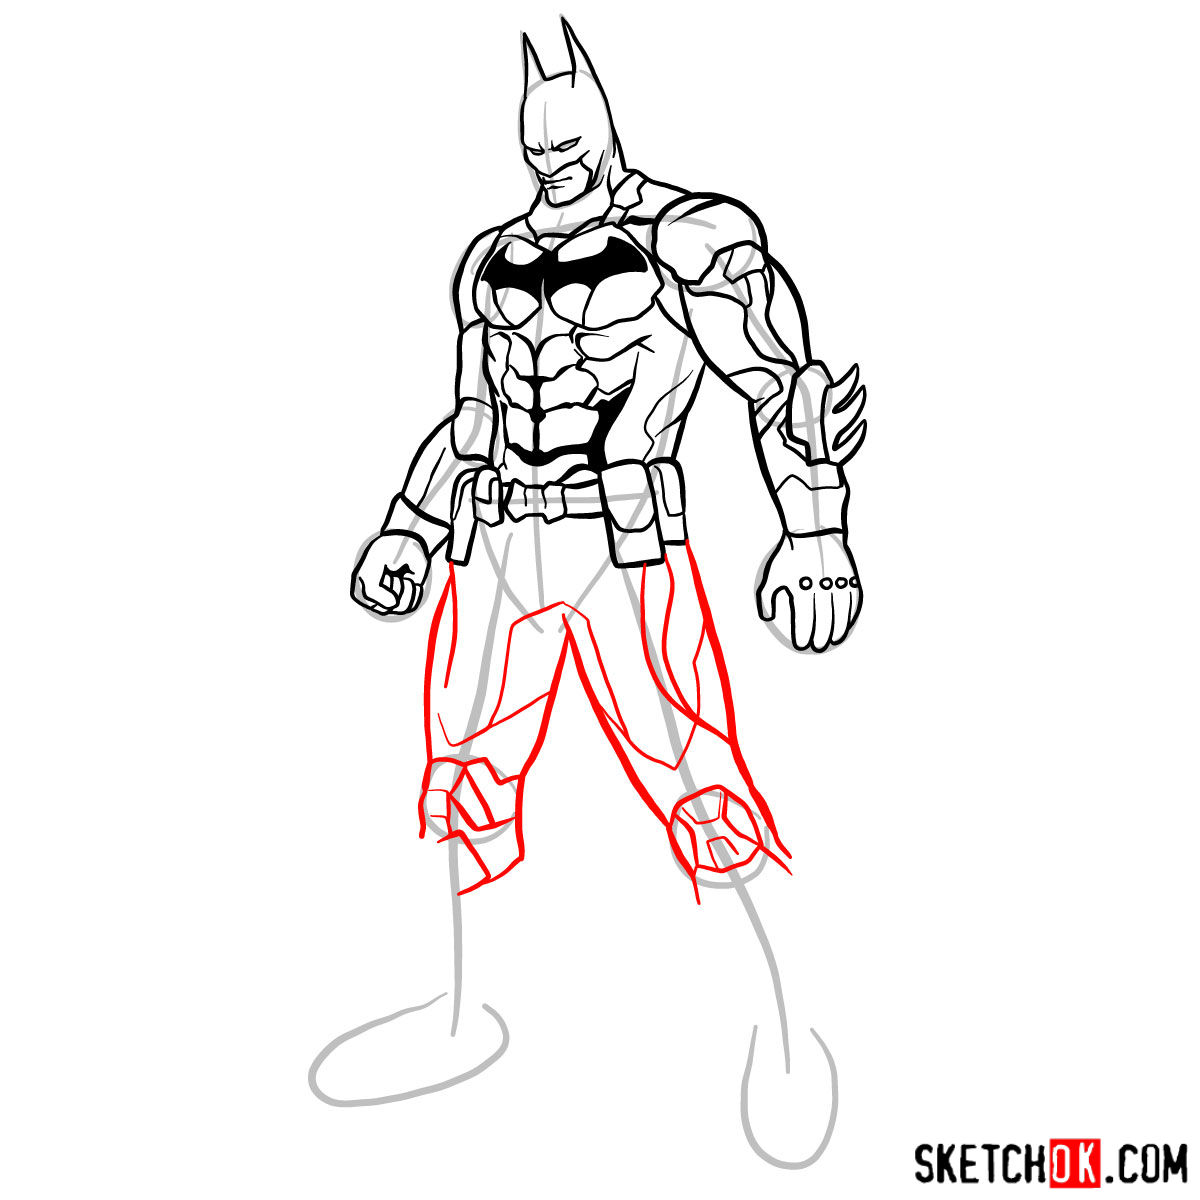 How to draw Batman the Dark Knight - step 12